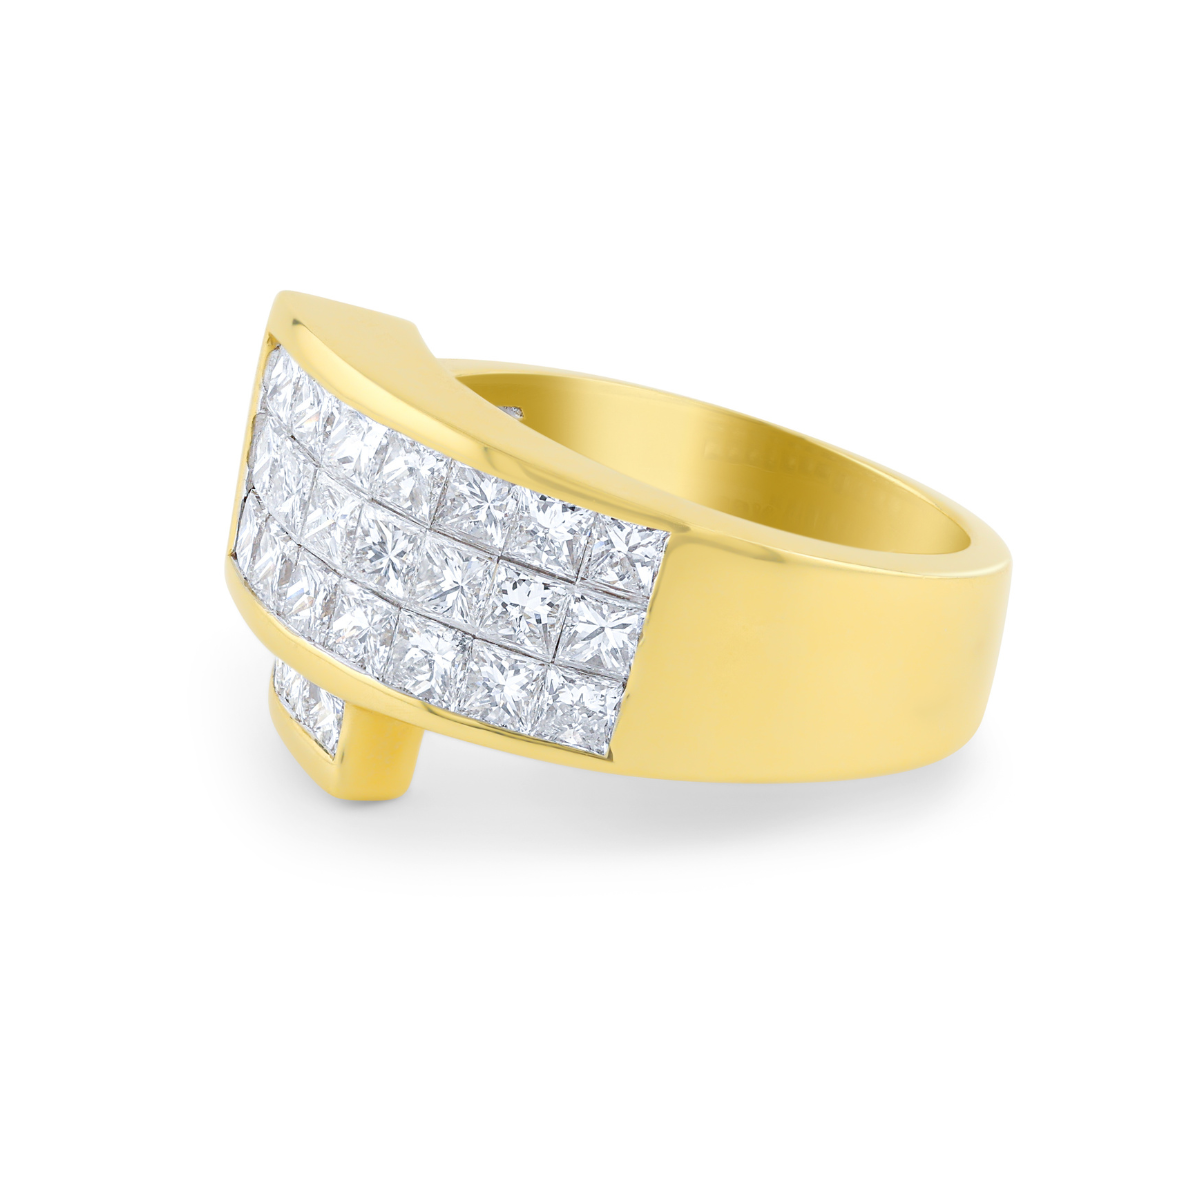 Princess cut diamond band ring